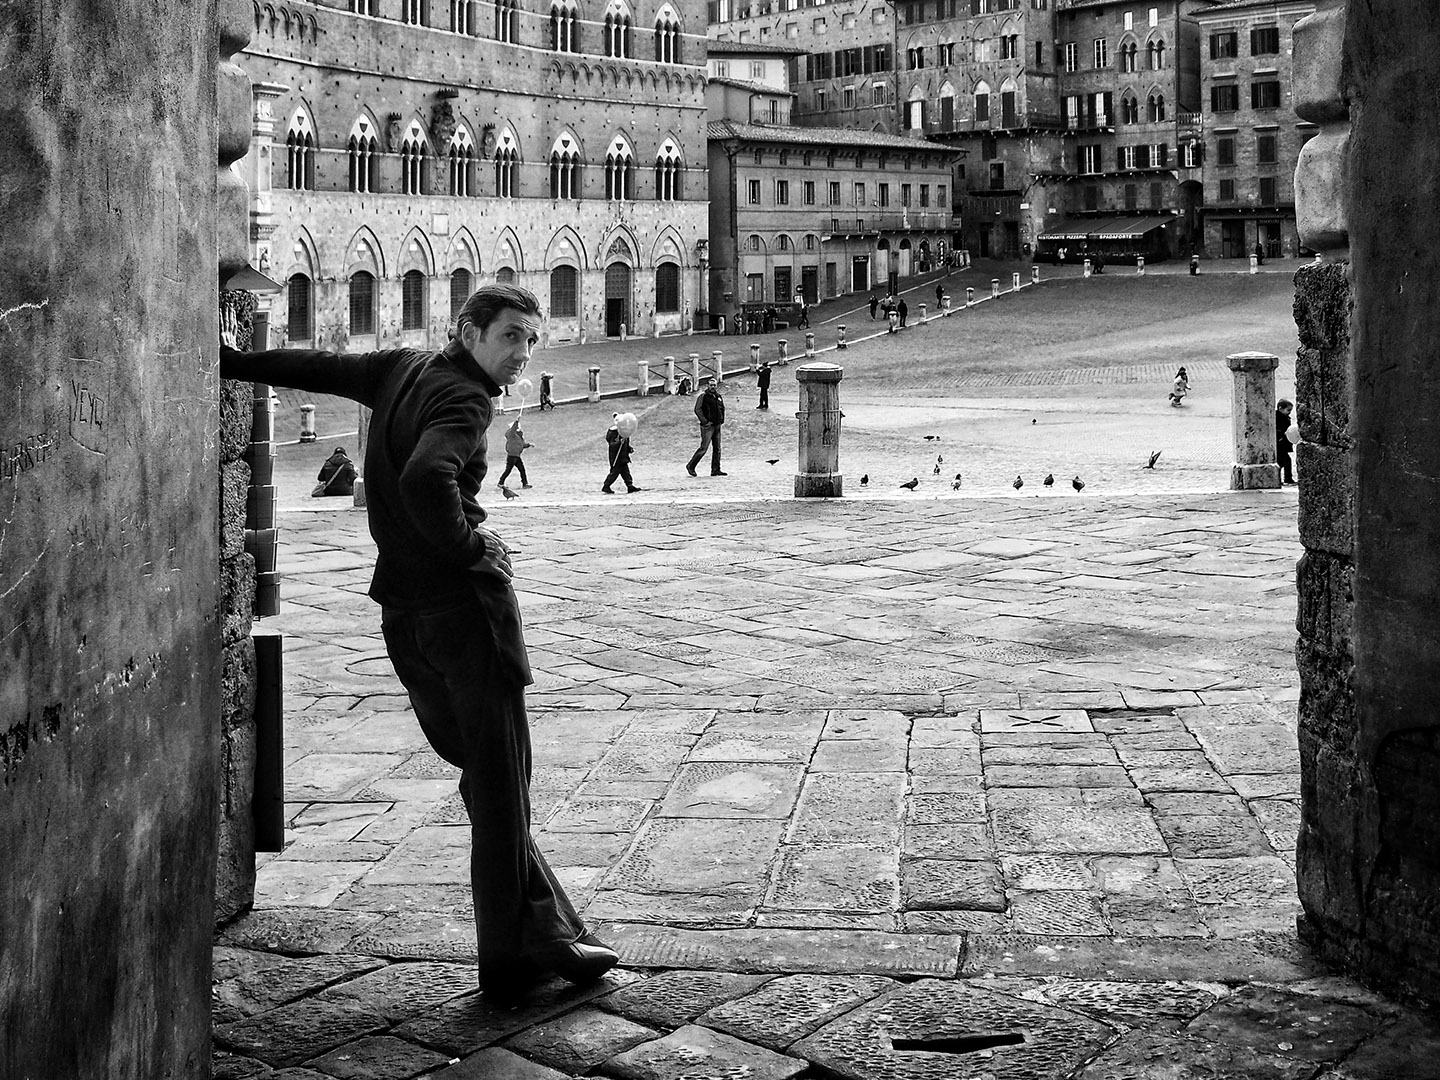 Categorie: Portrait, Street; Photographer: FRANCO GRONCHI; Location: Piazza del Campo, Siena, SI, Italia